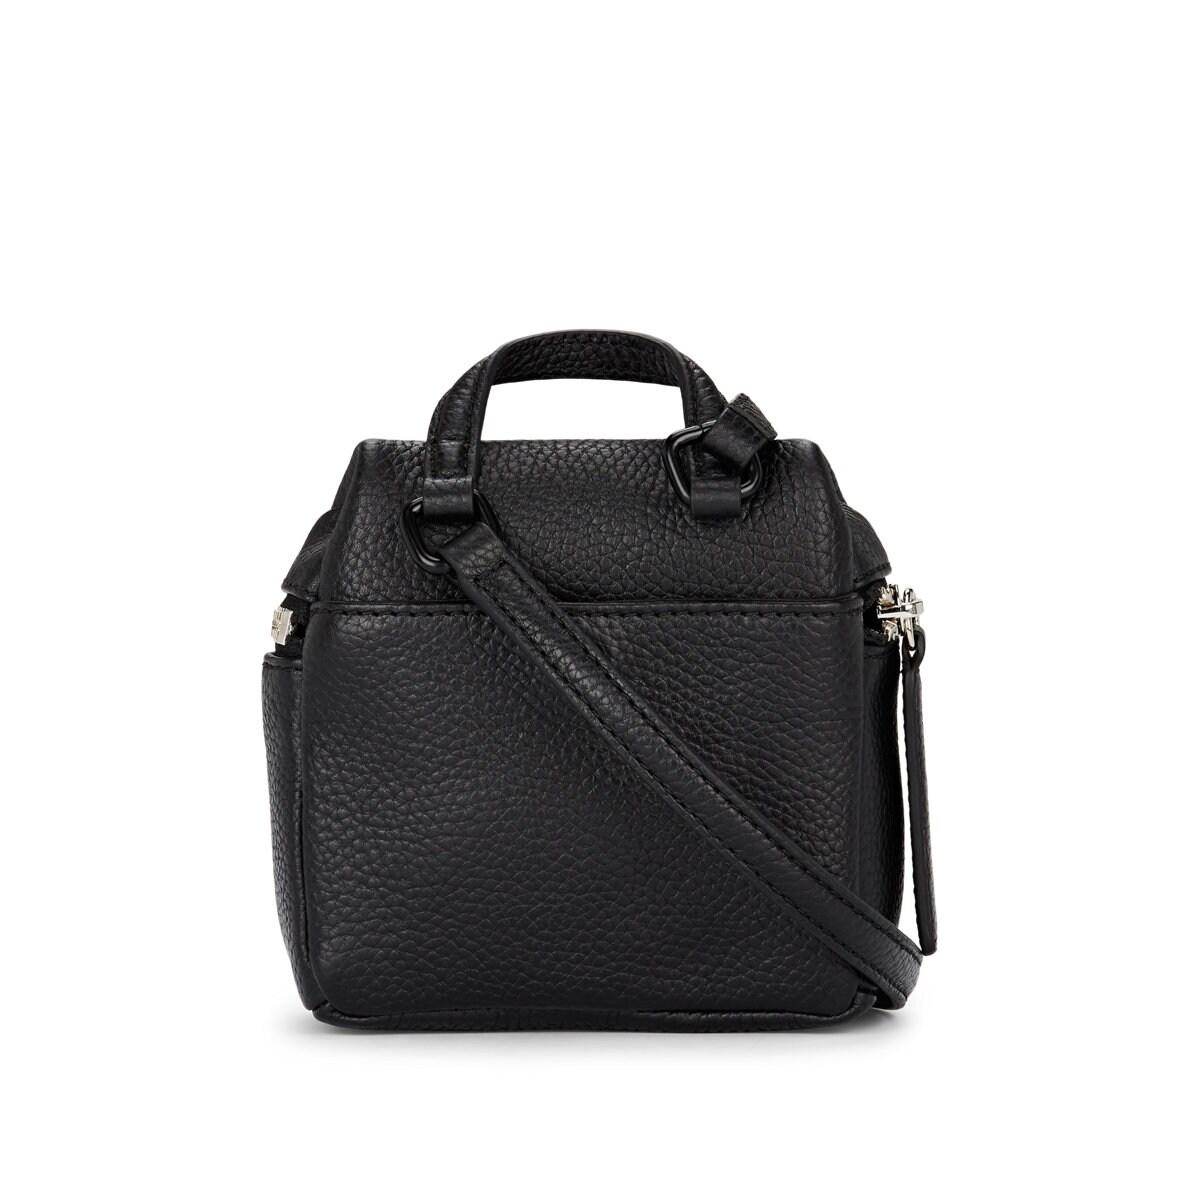 Kara Micro Leather Crossbody Bag in Black - Lyst